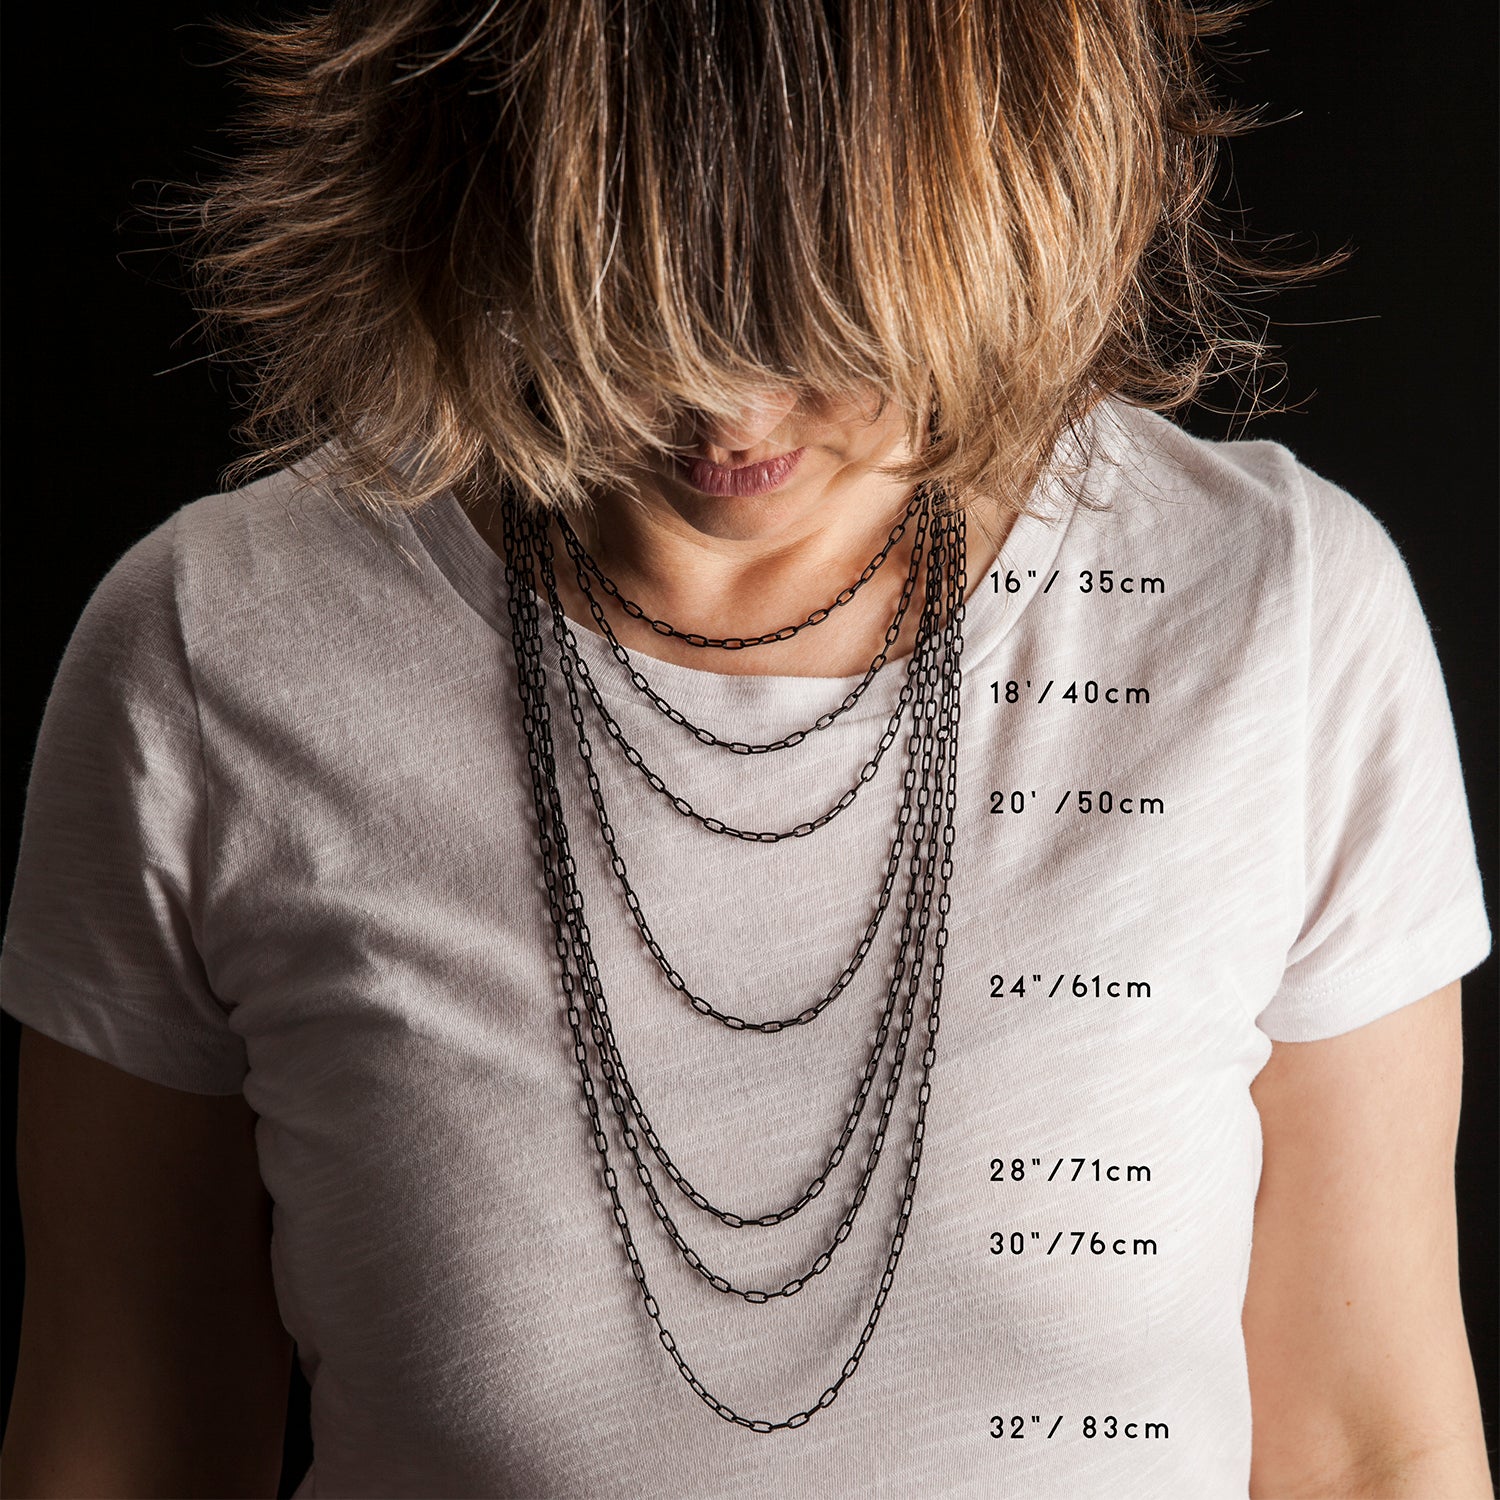 Porterness Studio Necklace Length Chart on a white shirt